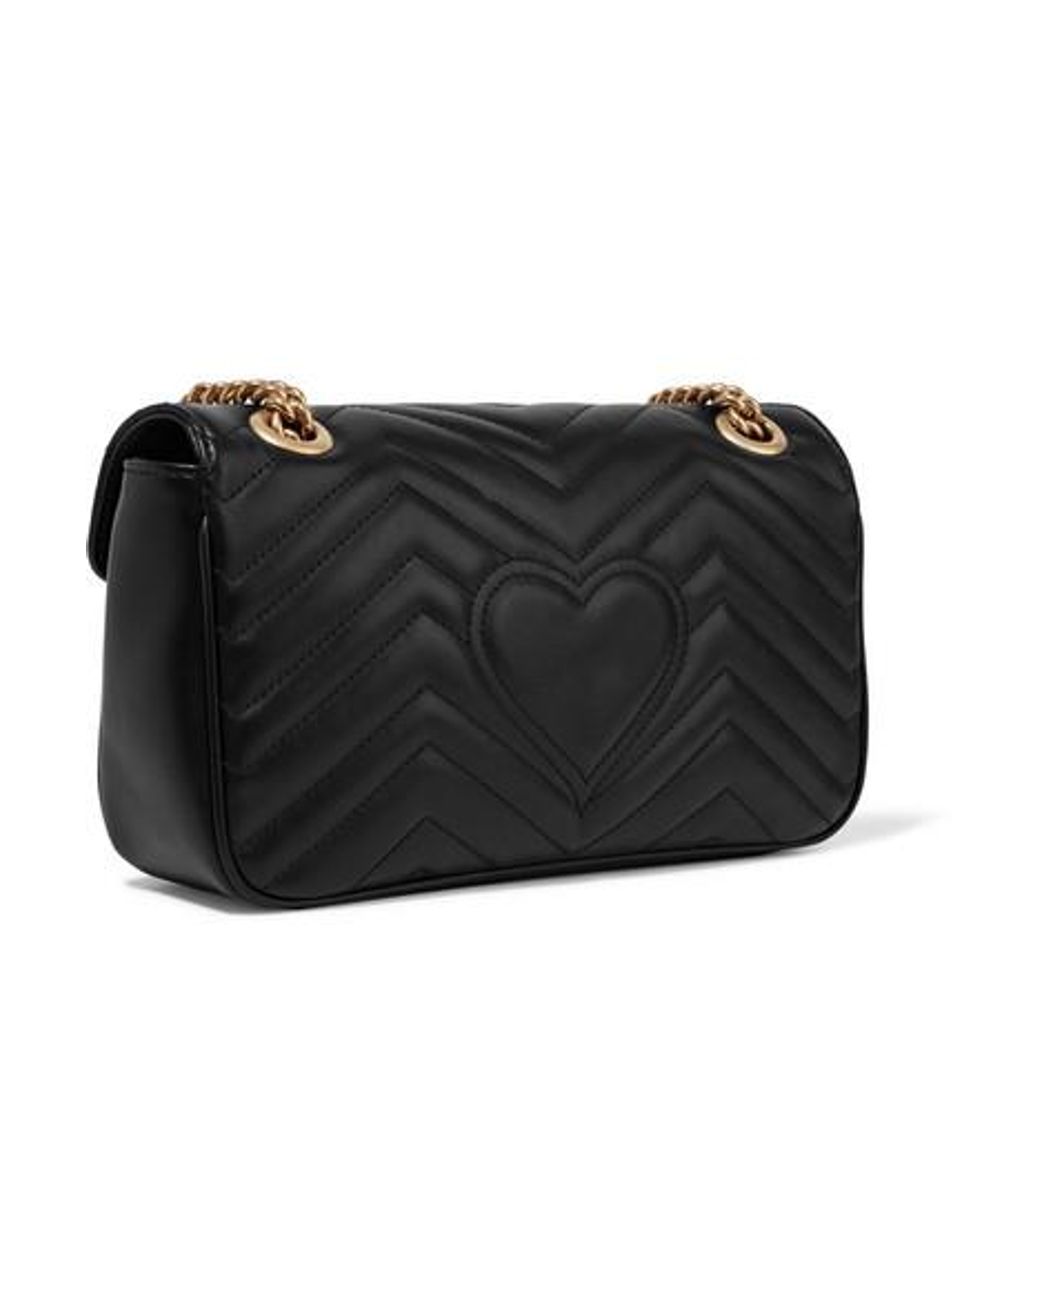 GUCCI Glazed Calfskin Matelasse Heart Mini GG Marmont Round Shoulder Bag  Romantic Cerise 1294726